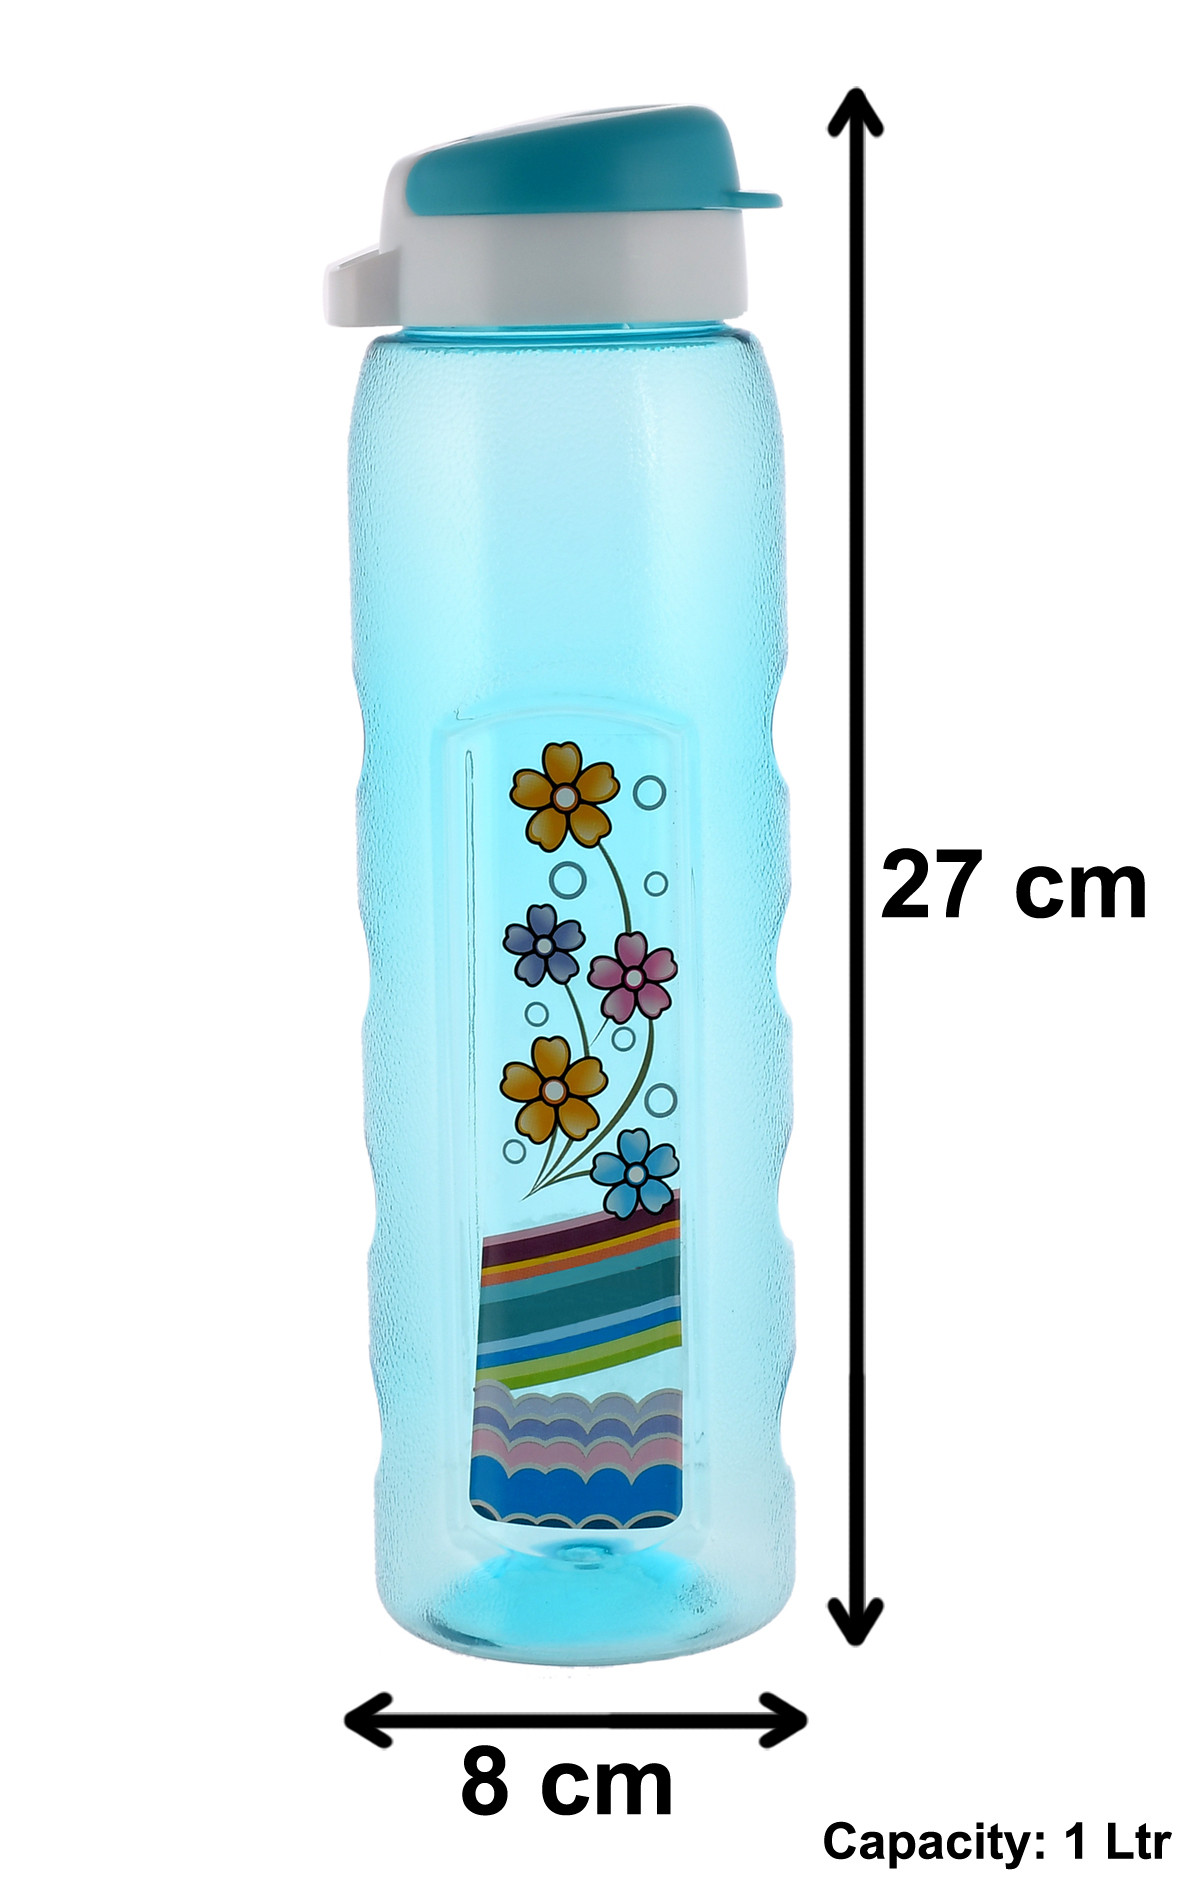 Kuber Industries Unbreakable BPA & Leak Free Plastic Water Bottle With Sipper-1 Litre, Pack of 4 (Purple & Sky Blue & Black & Green)